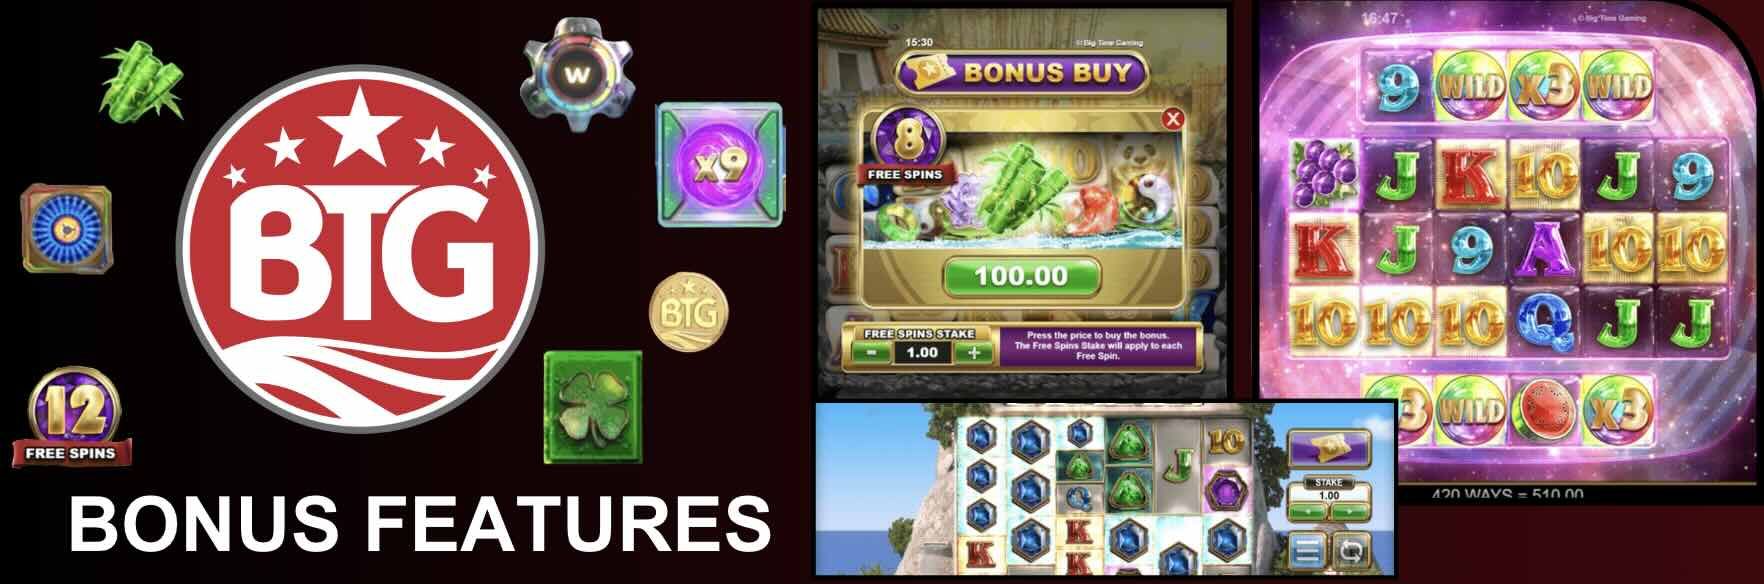 Image of Big Time Gaming Bonus Features